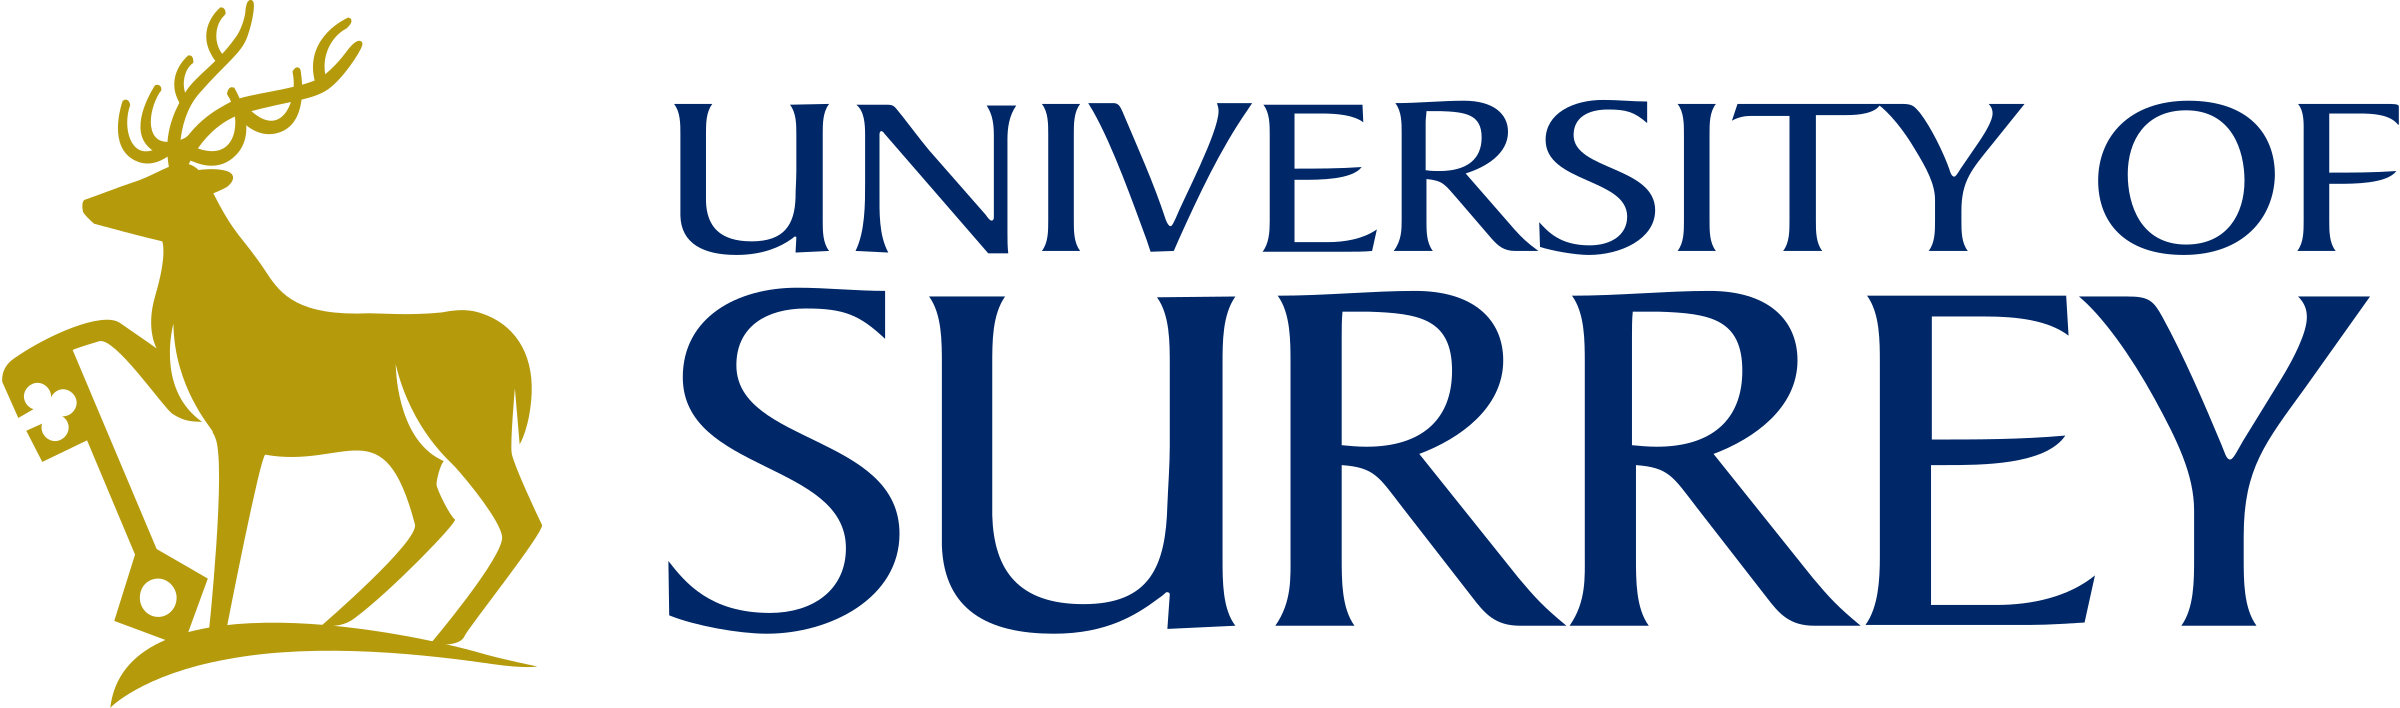 university of surrey logo png transparent